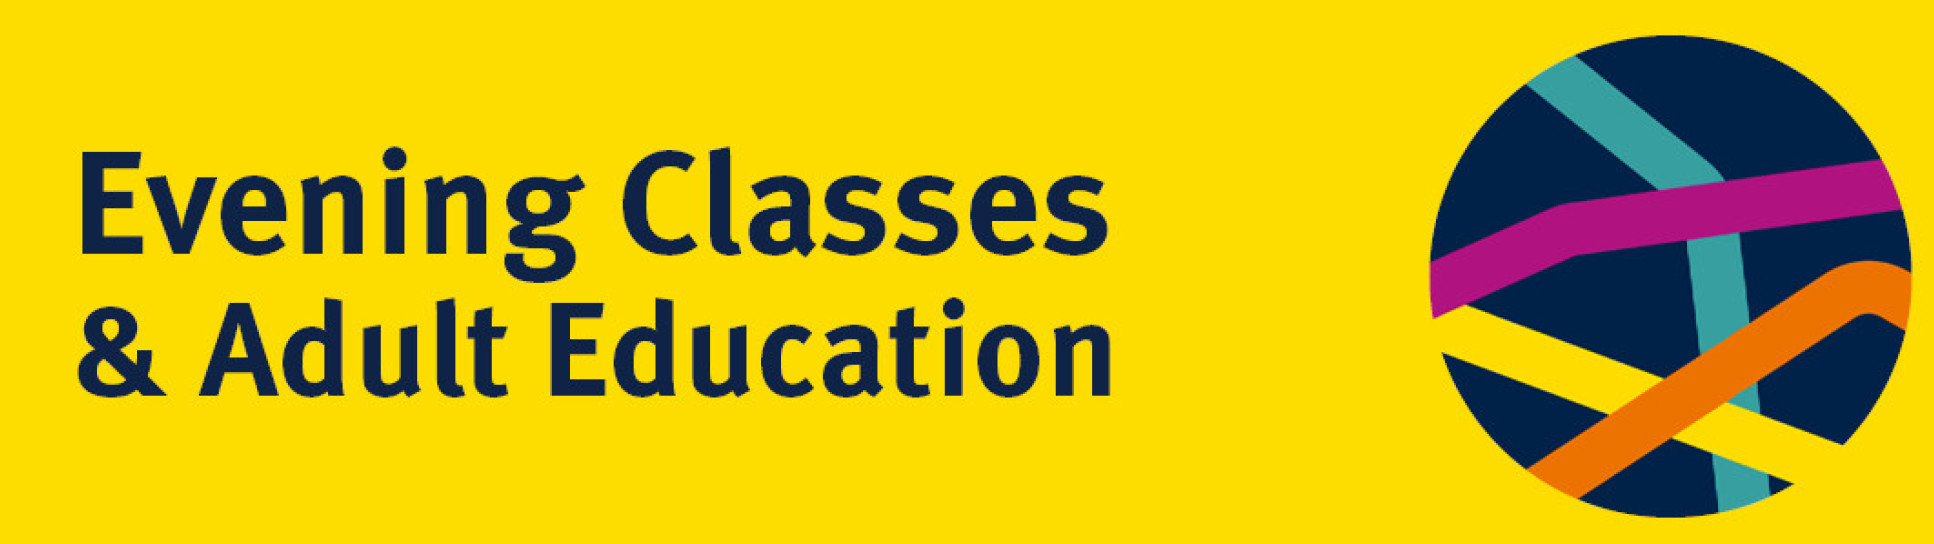 Evening Classes & Adult Education